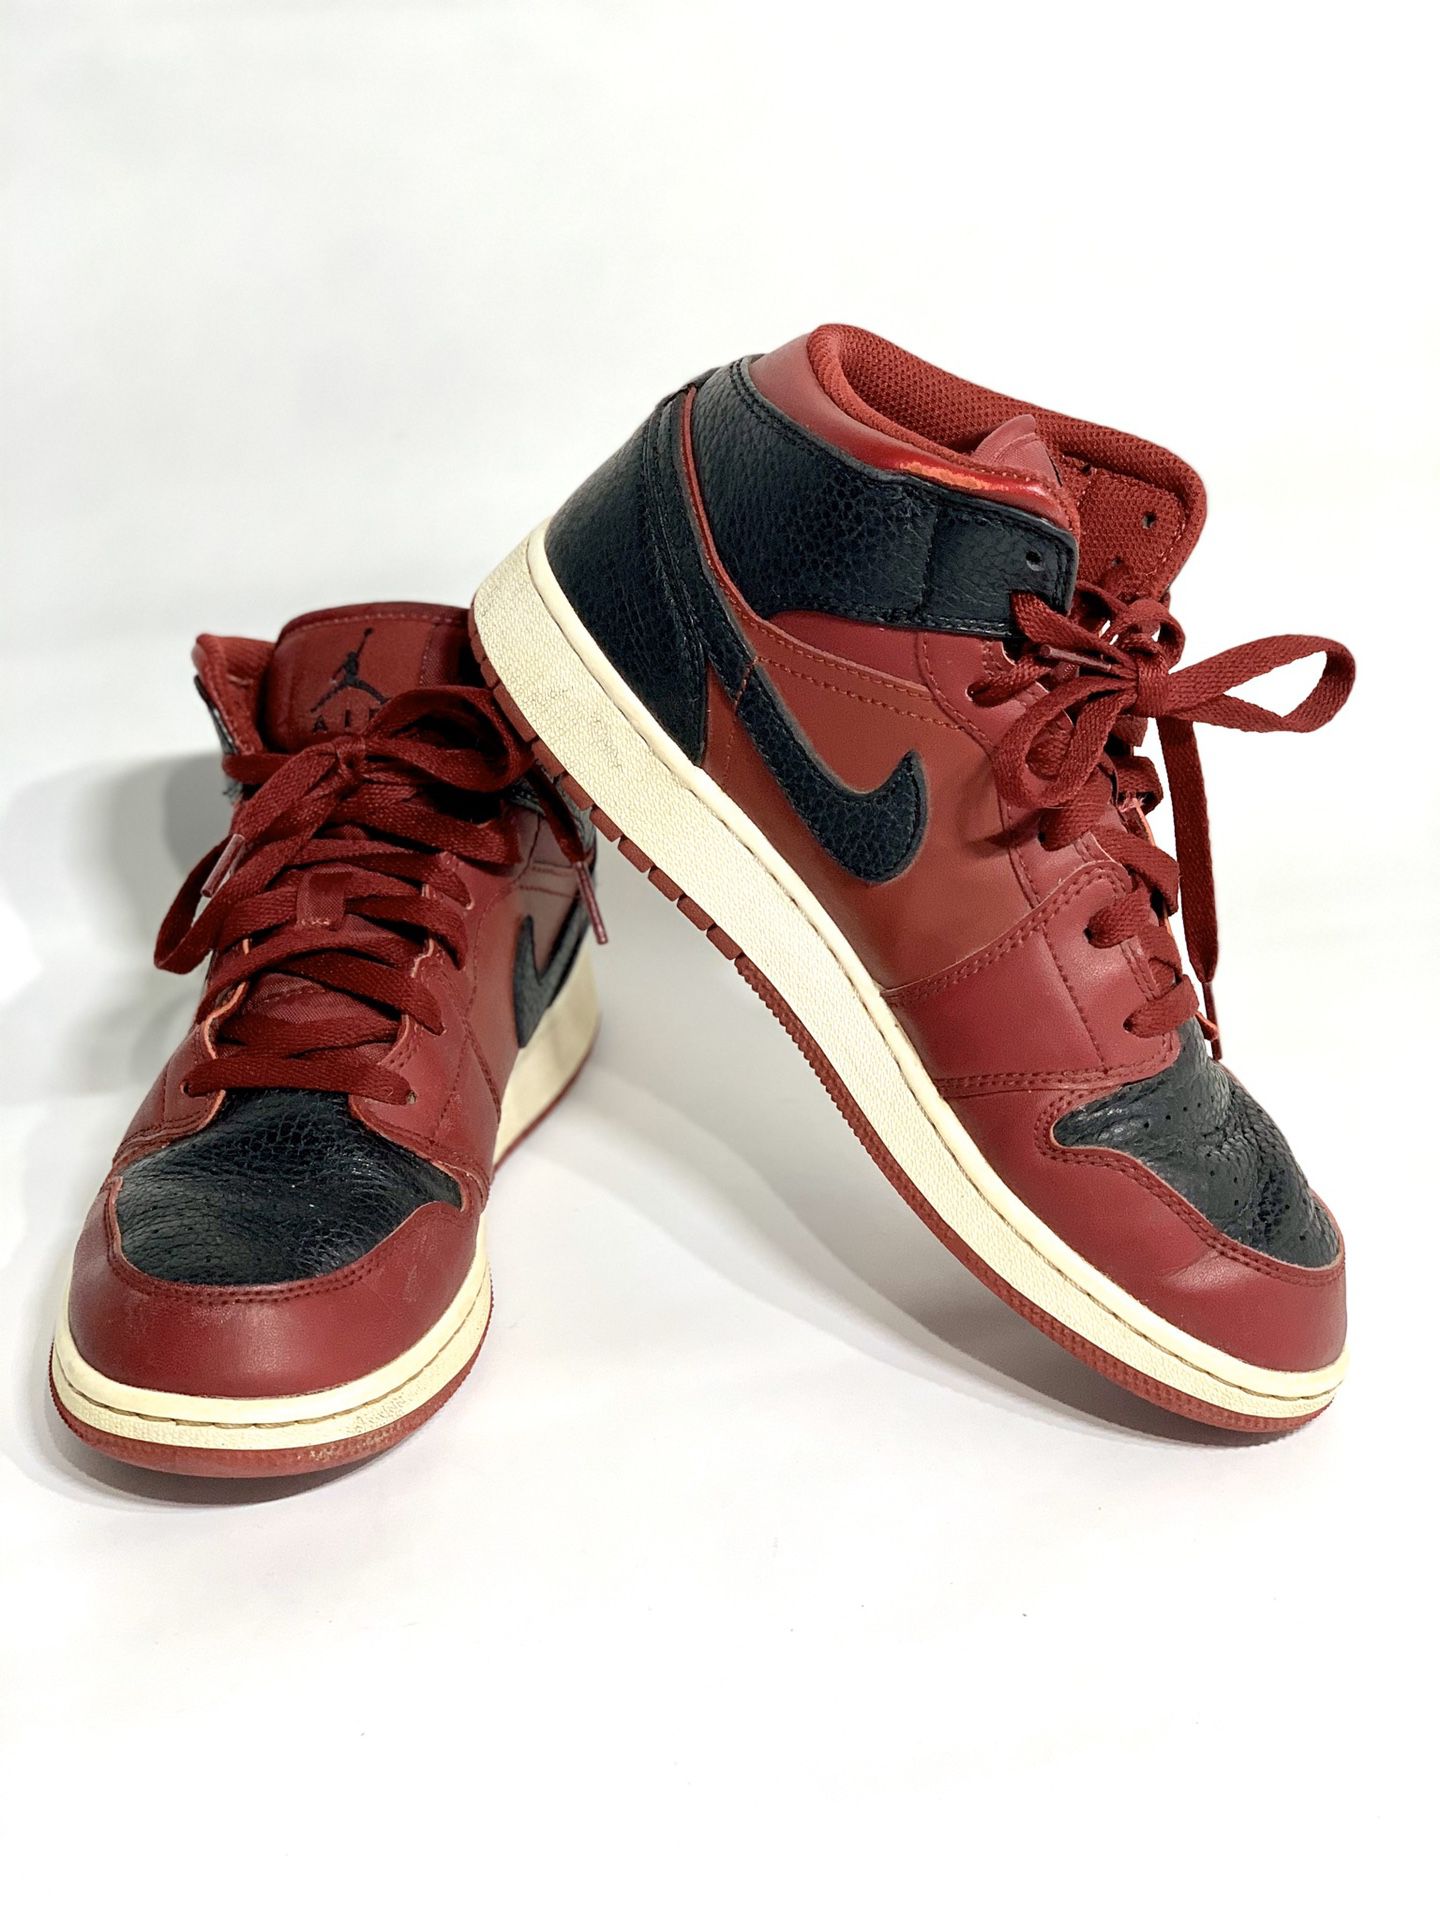 Nike Air Jordan 1 Mid GS Shoe Team Red/Black Shoes Men's (Size: 7Y) 554725-601